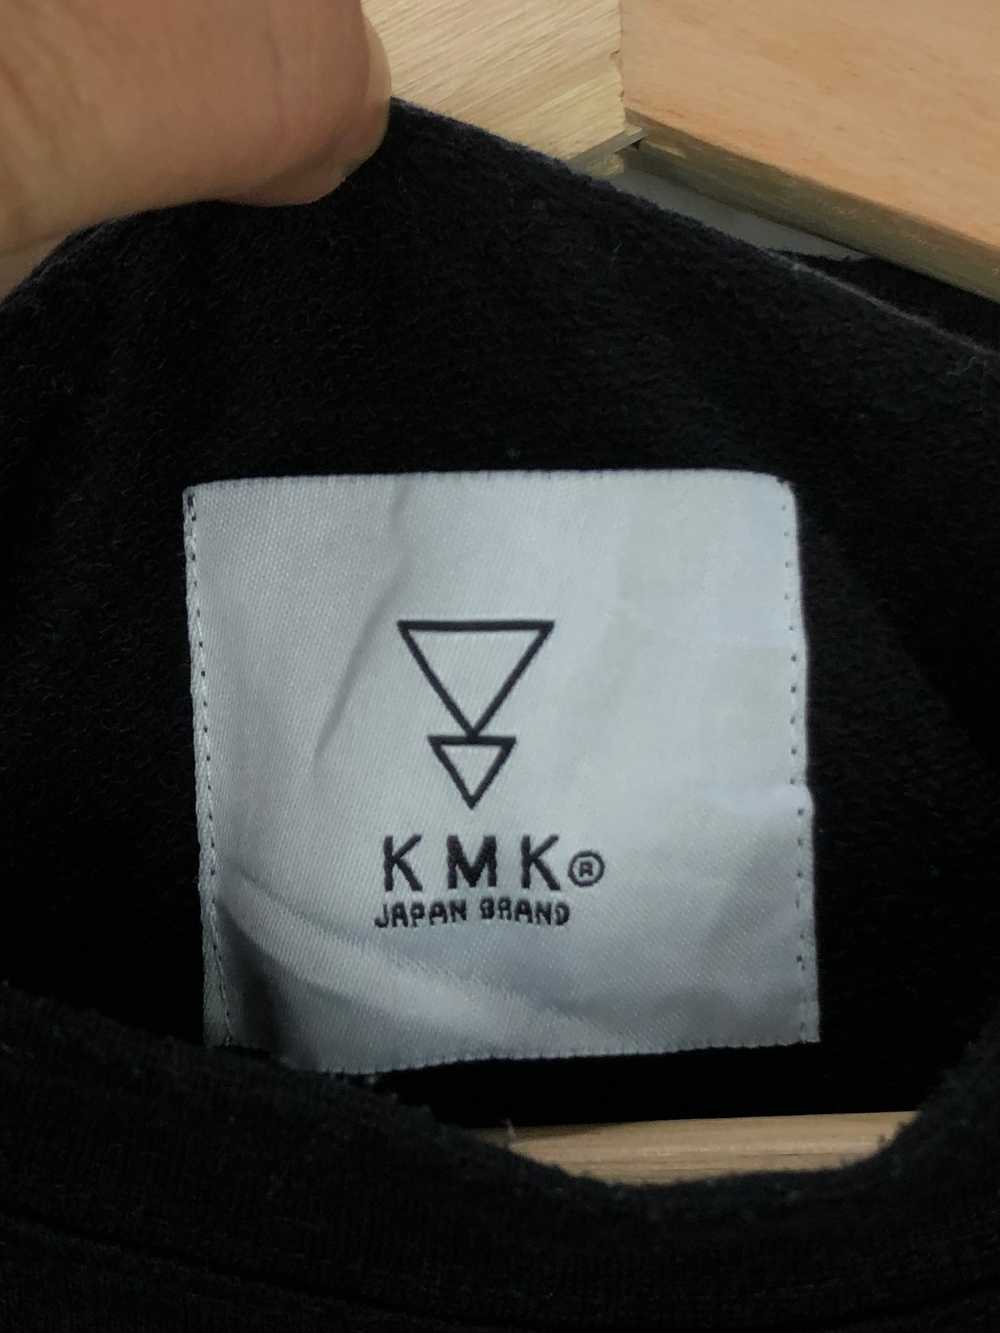 Japanese Brand - KMK Japan Brand - image 2